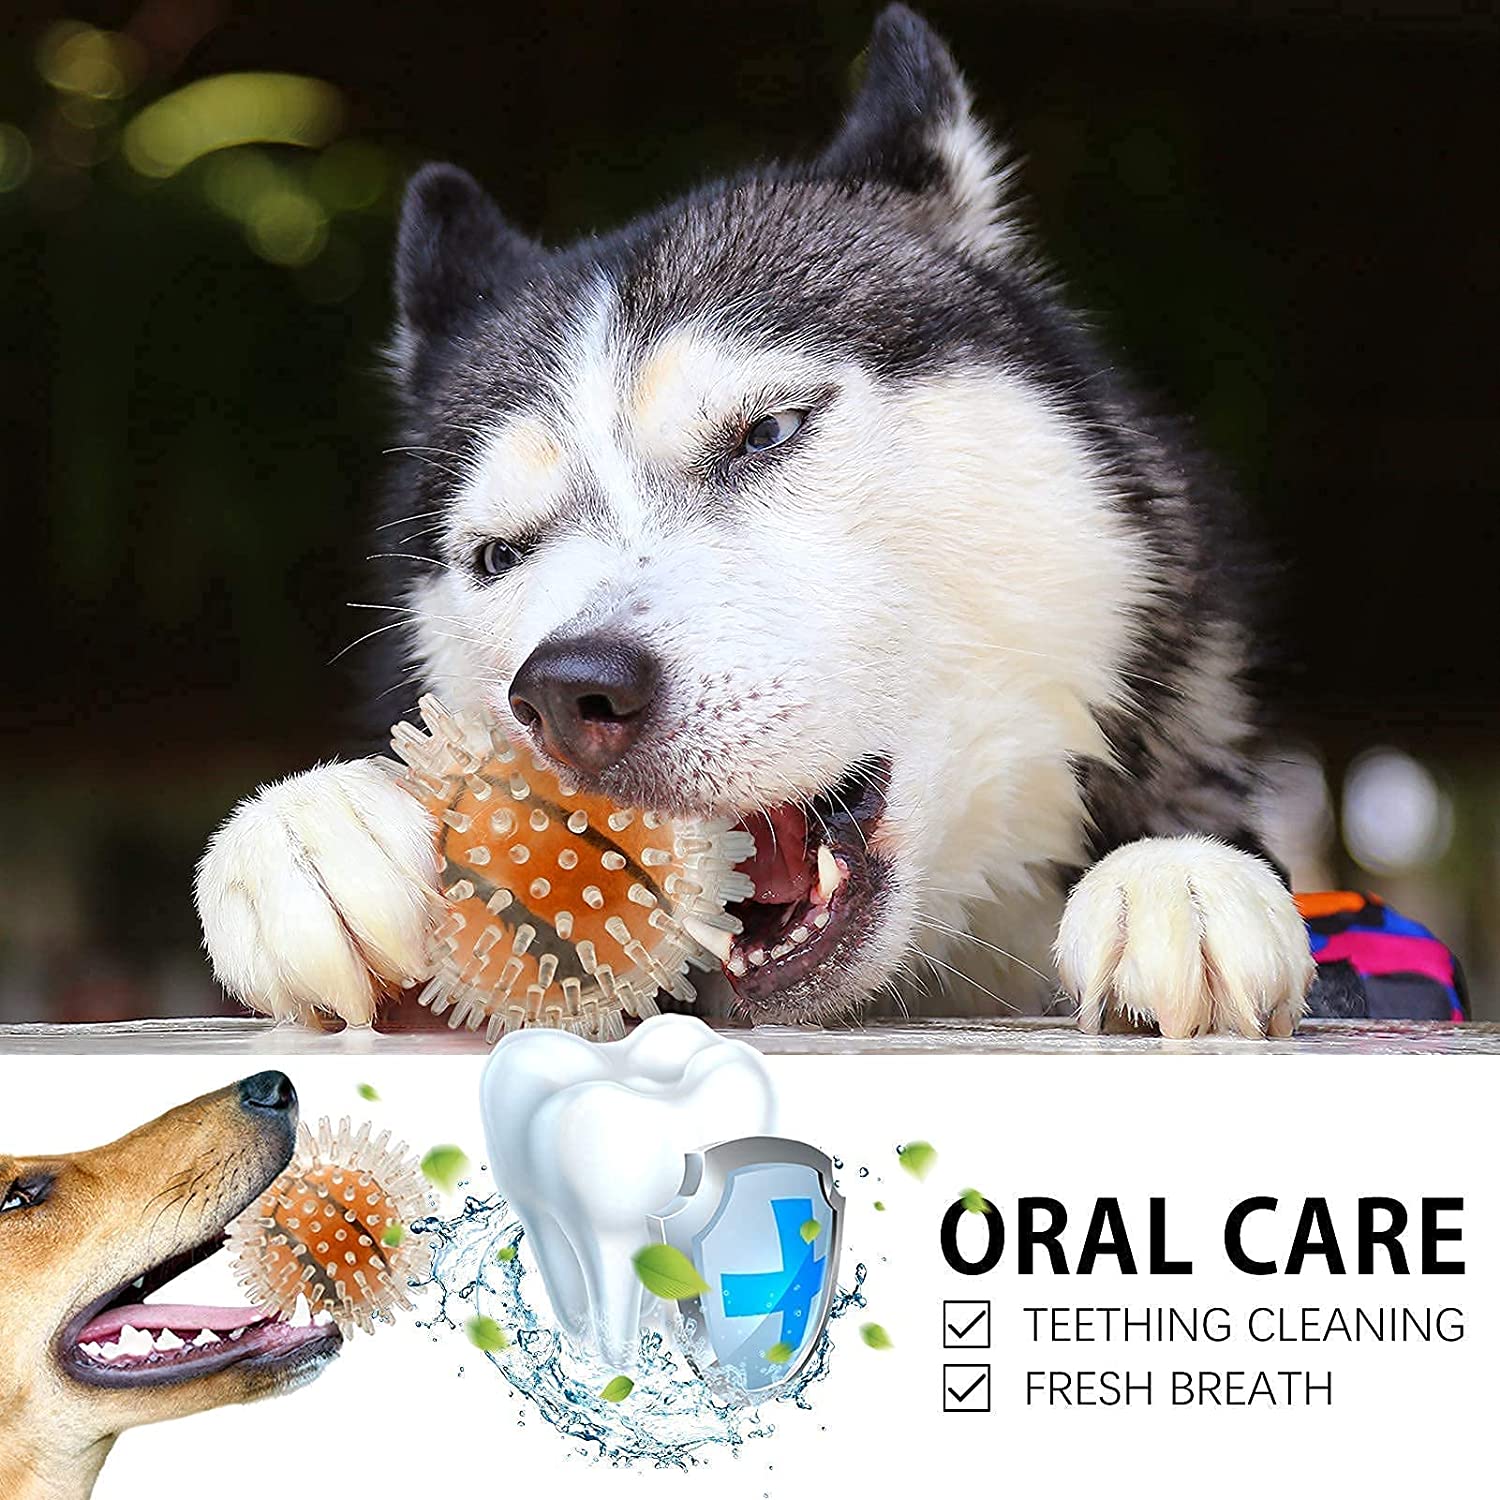 Pelota dental para perros de American Kennel Club